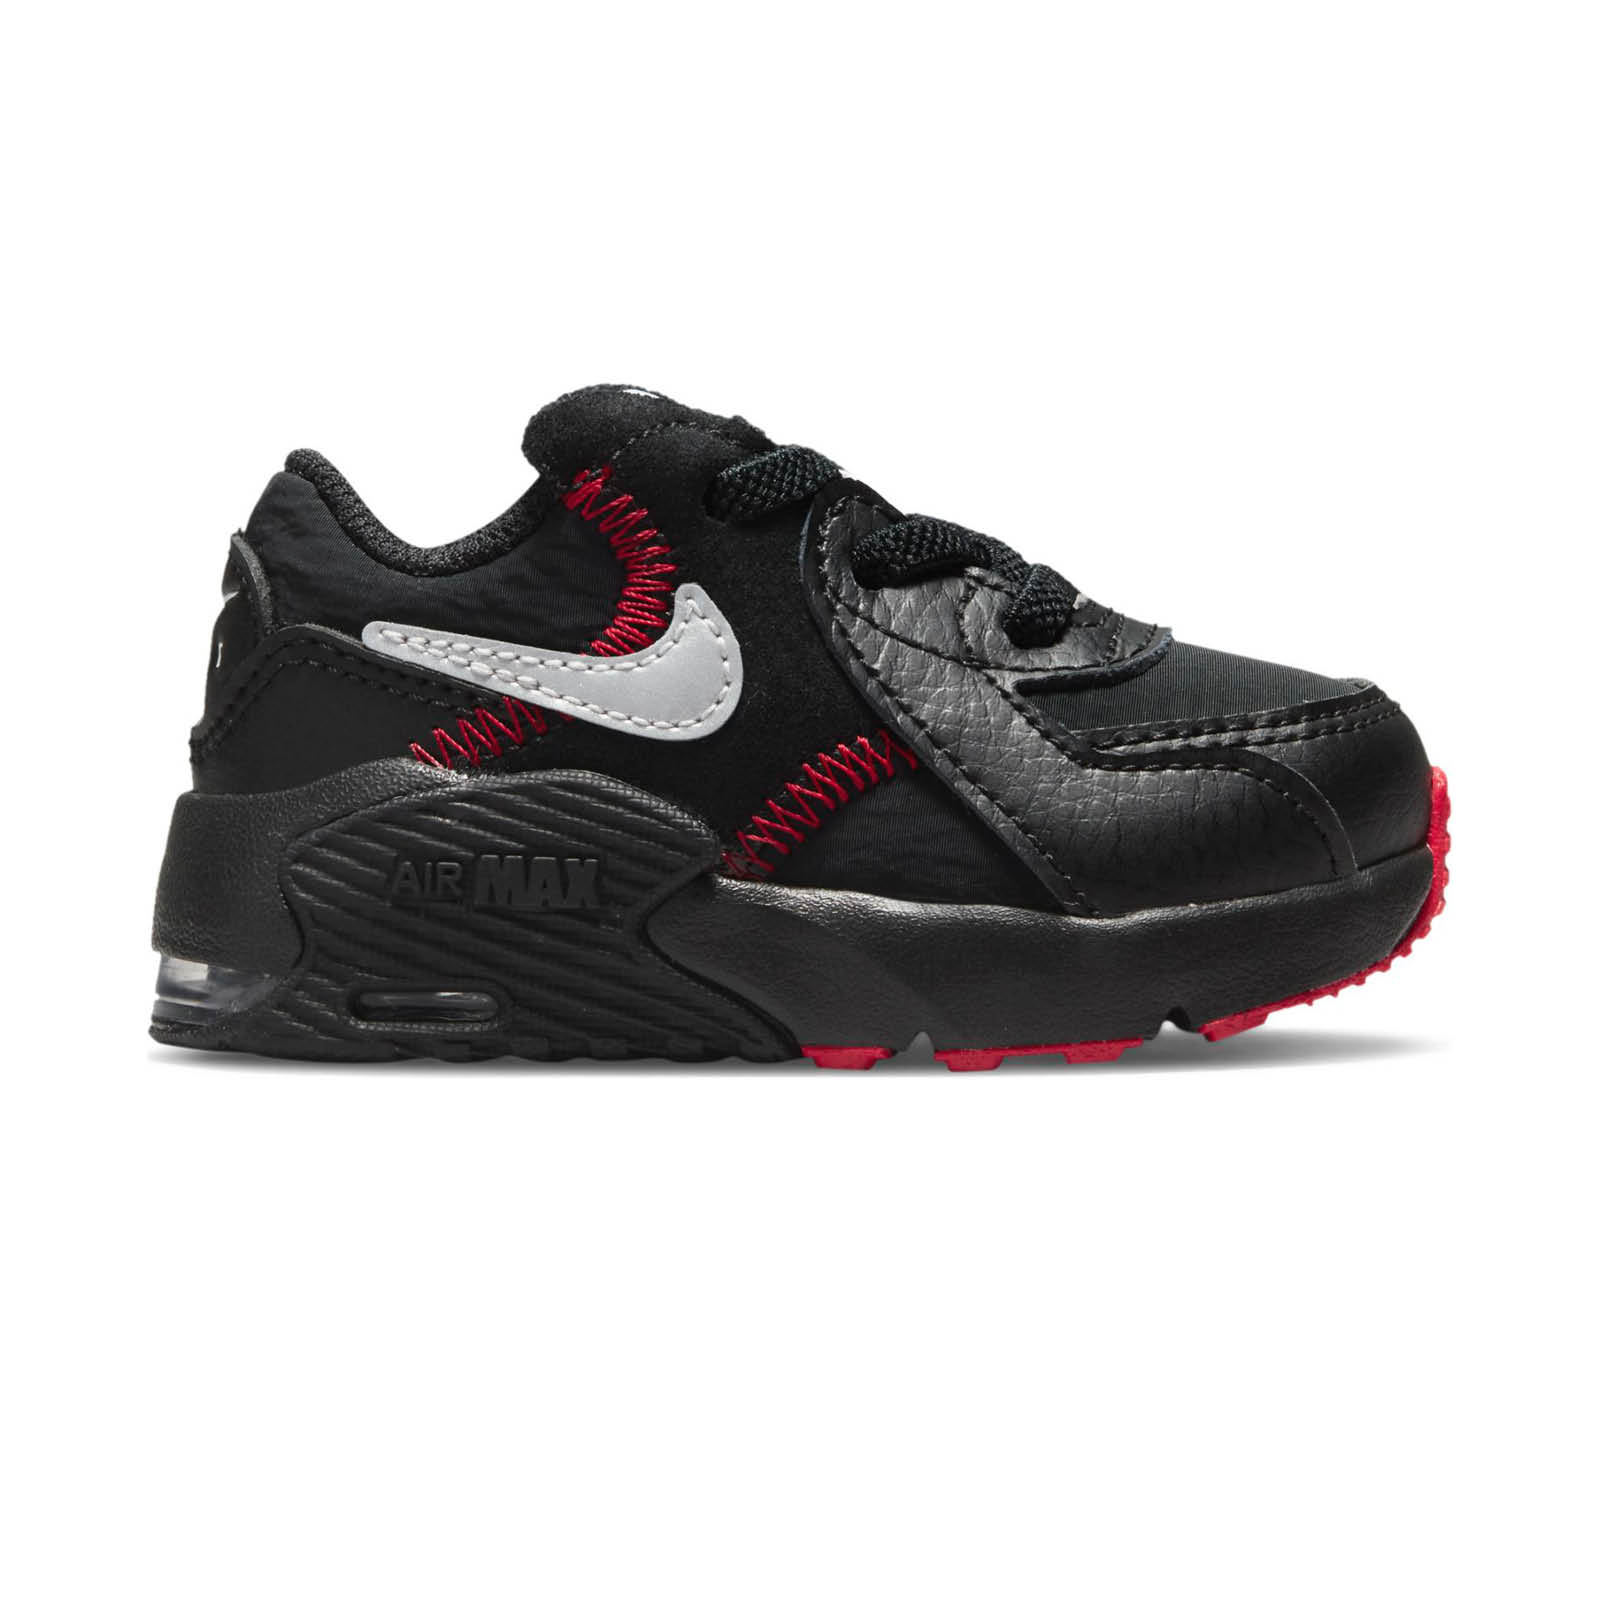 Nike - NIKE AIR MAX EXCEE (TD) - BLACK/METALLIC SILVER-BLACK-SPORT RED 559496